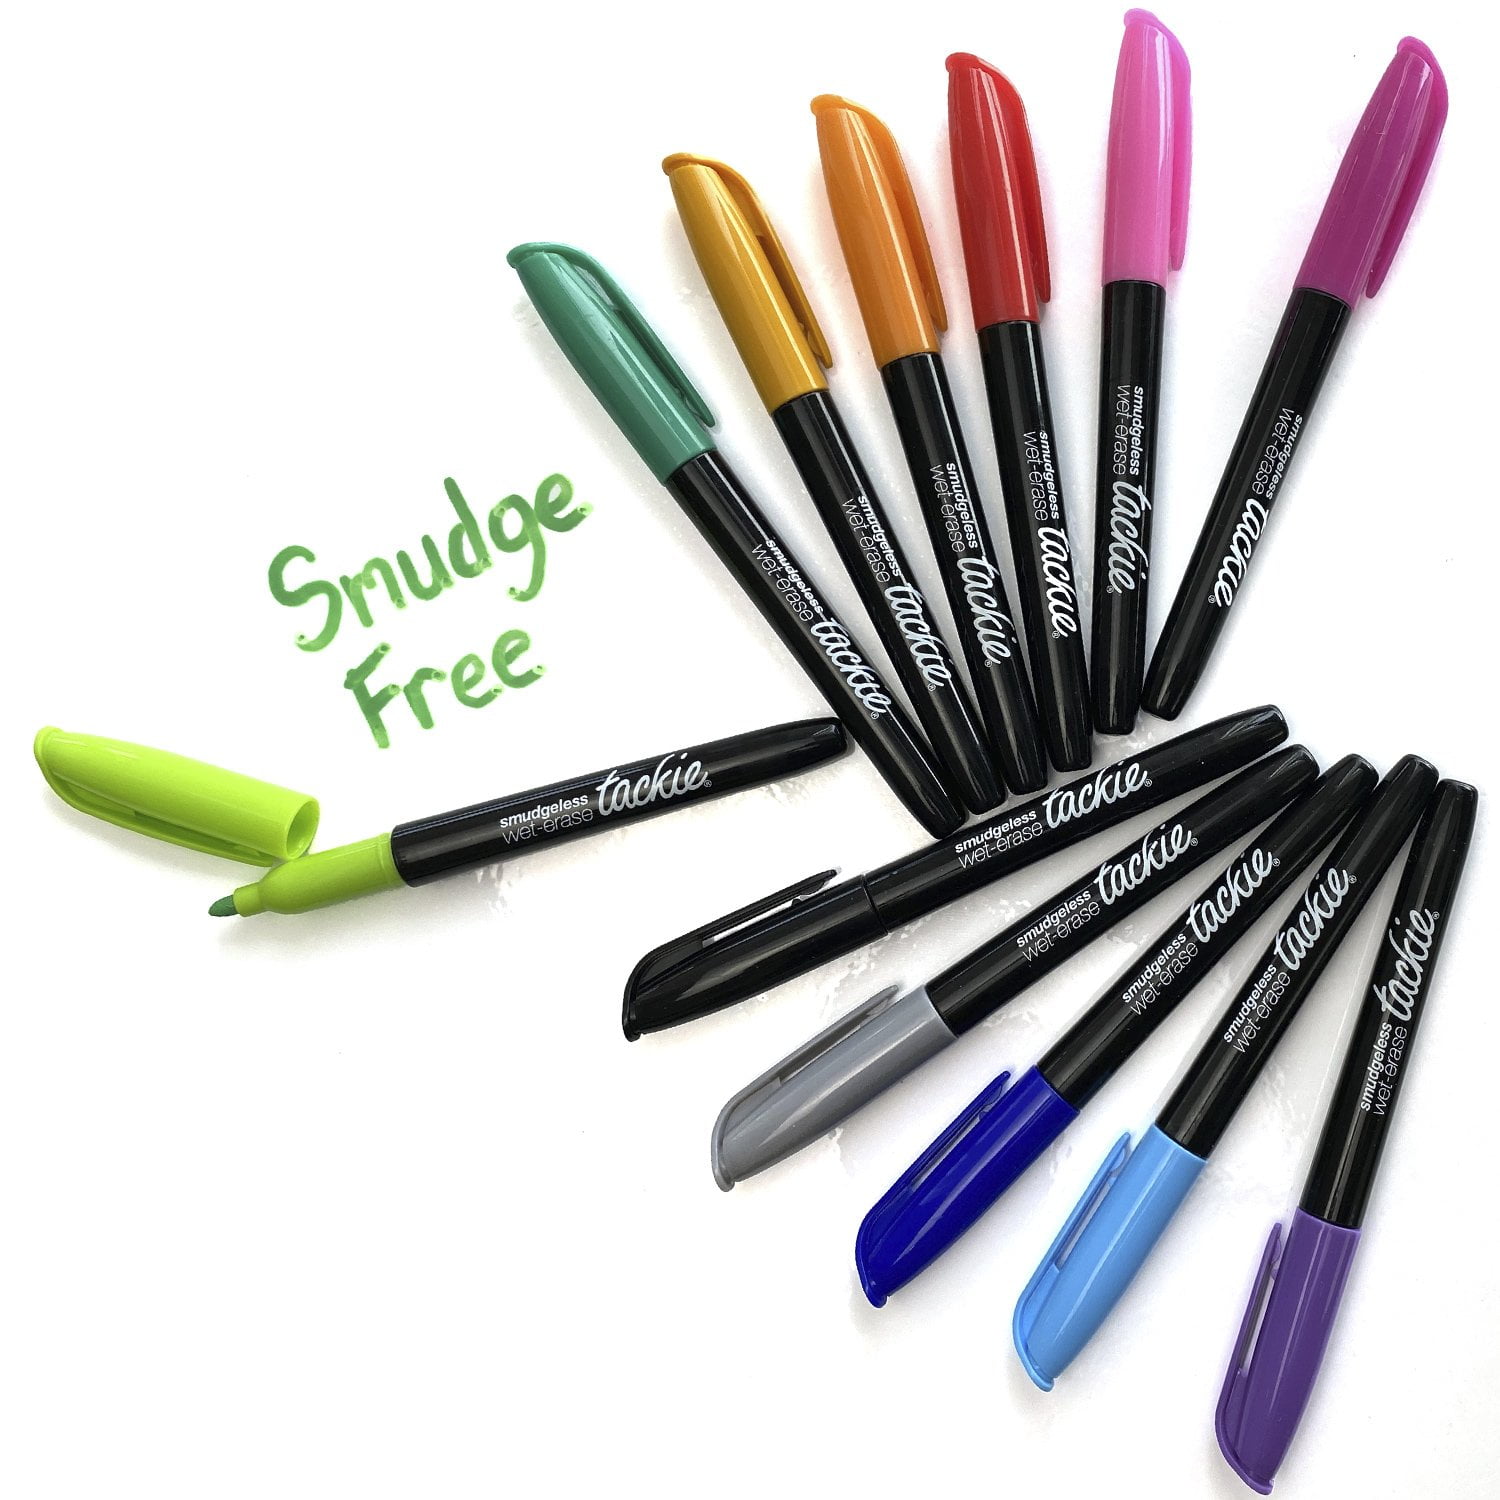  Todkoding Dry Erase Markers,Smudge Free, Wet Erase